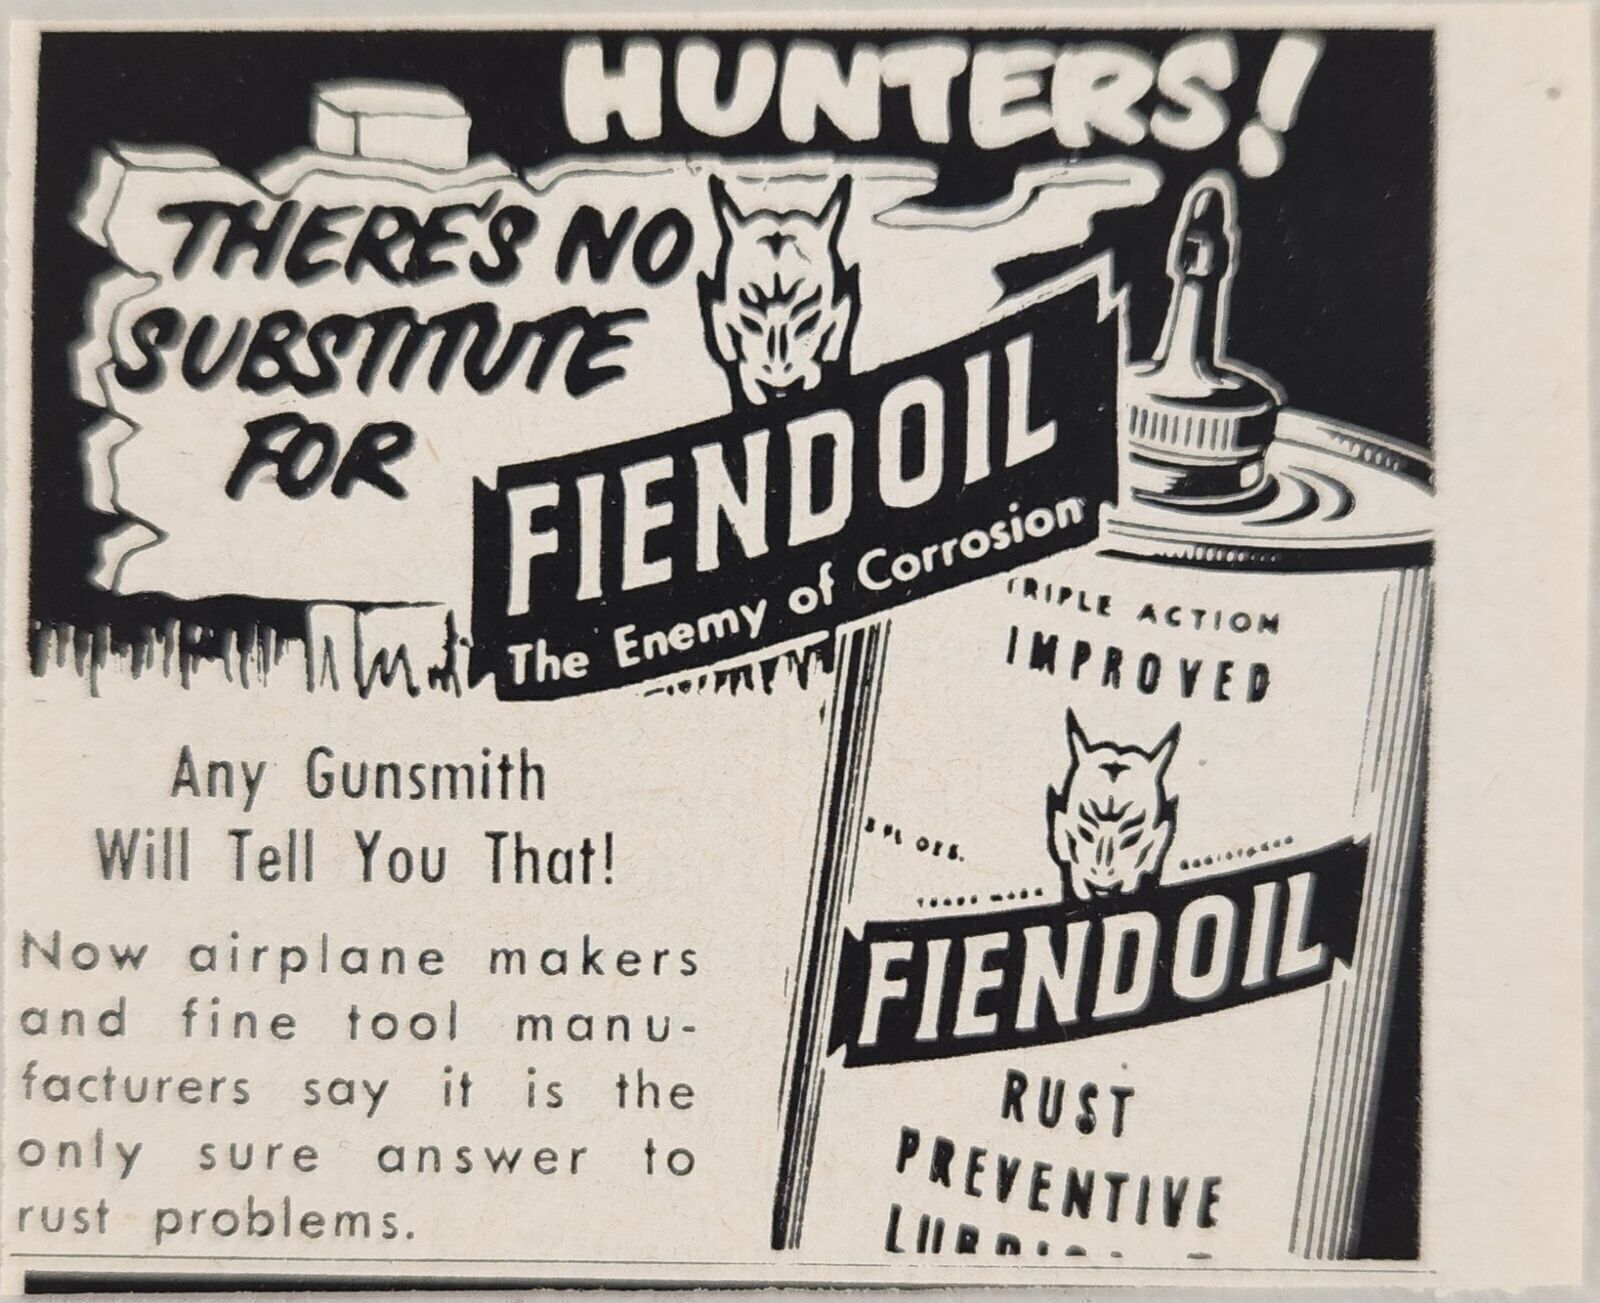 1954 Print Ad Fiendoil Rust Preventative Oil for Guns Hunting Gunsmith Approved